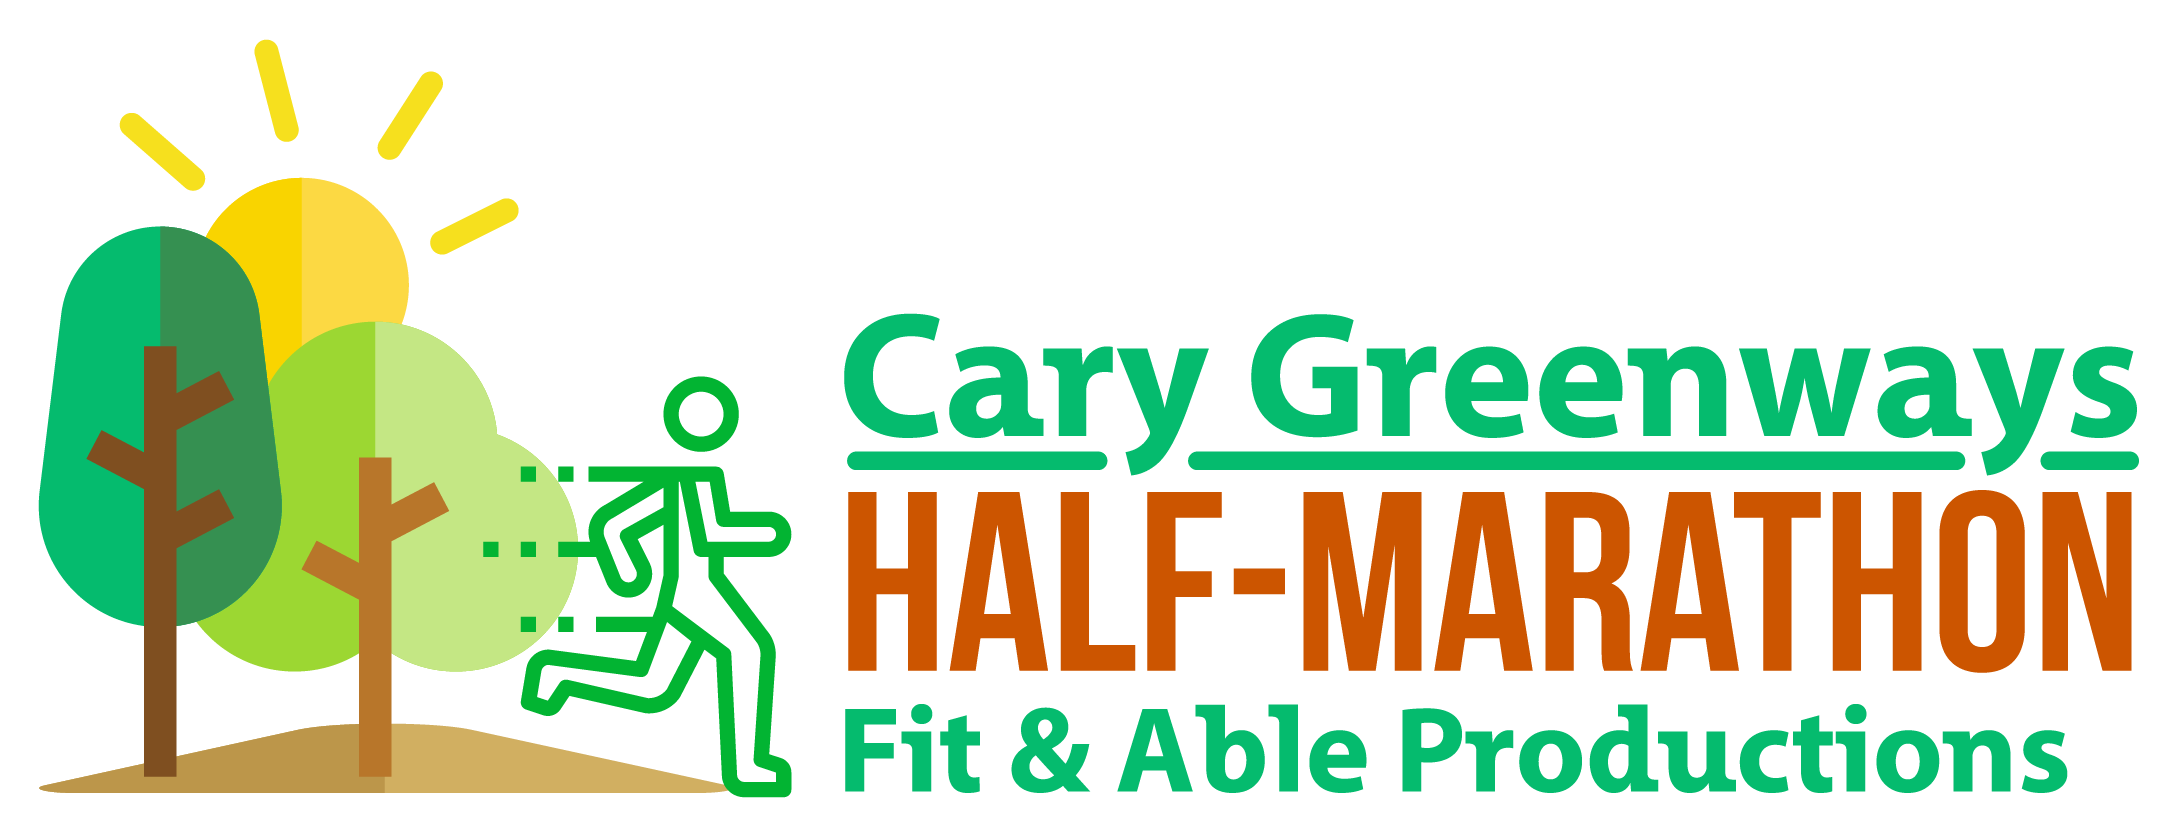 Cary Greenways Half-marathon